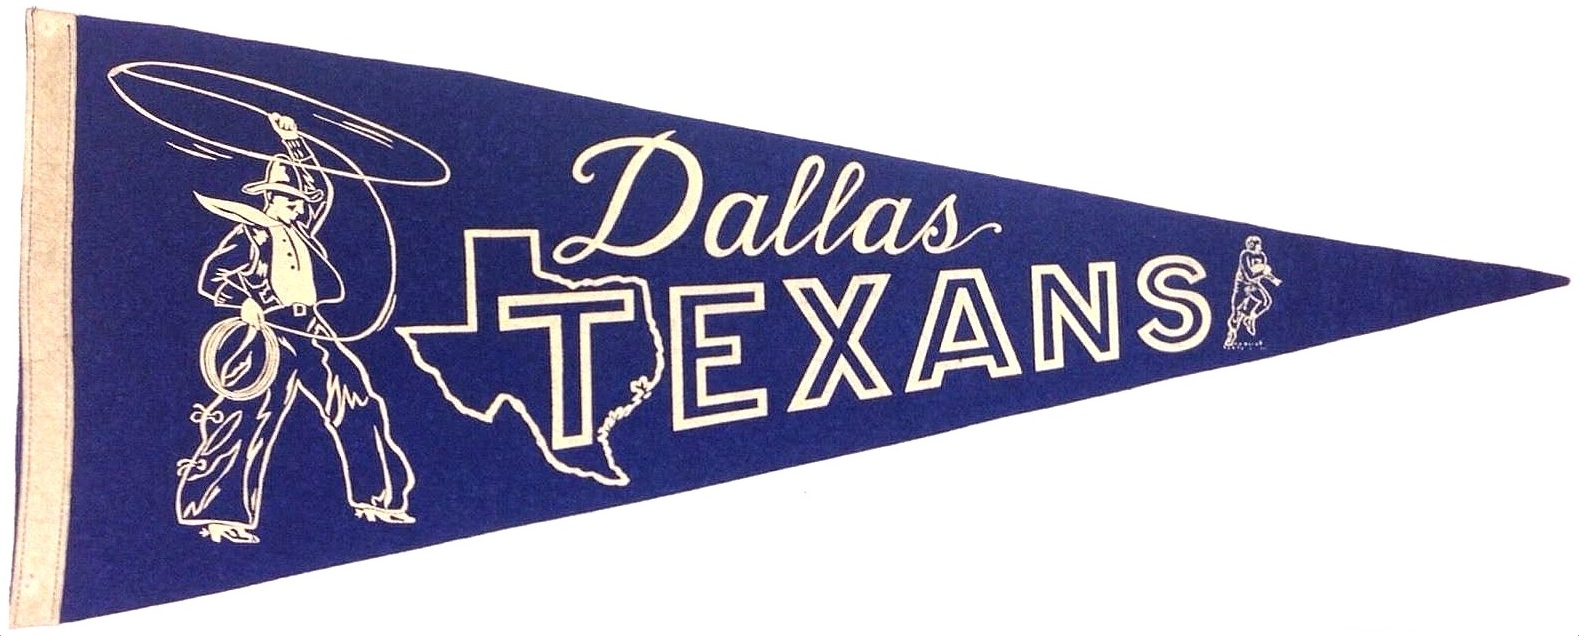 dallas texans football team 1960